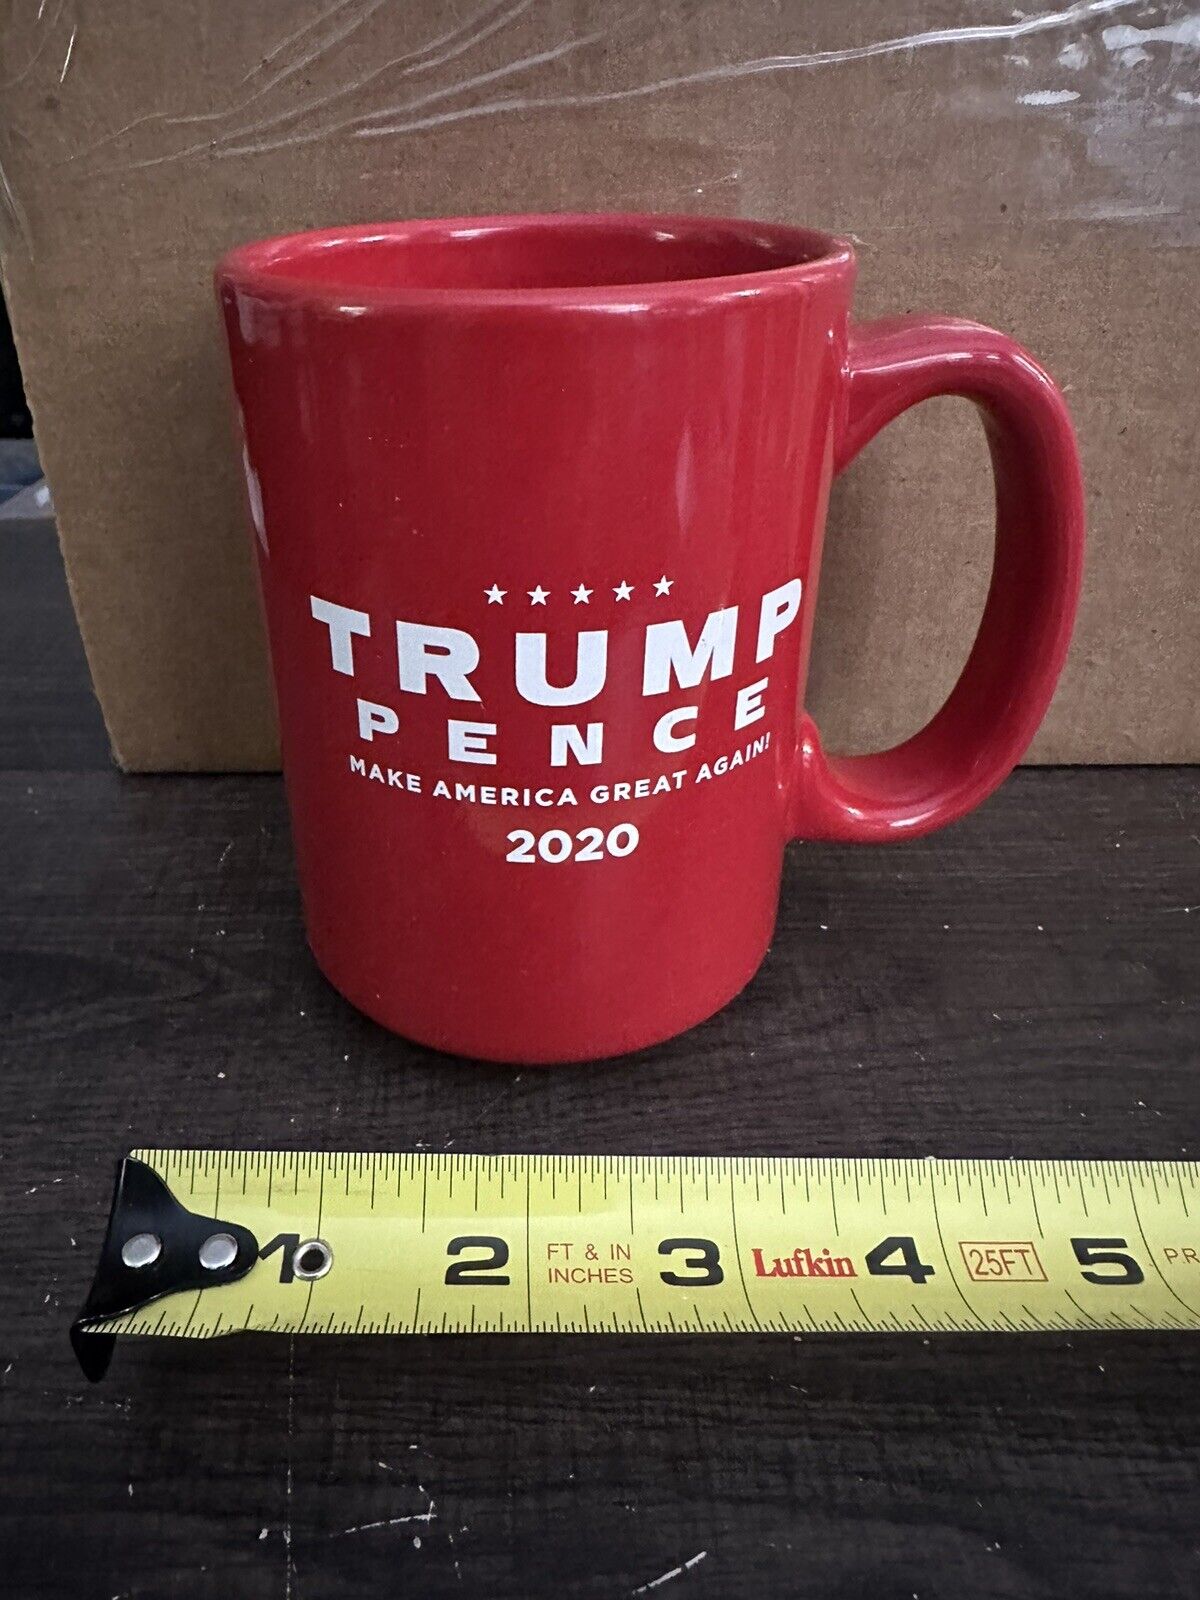 Donald Trump & Pence 2020 MAGA Make America Great Again Red Coffee Mug Cup